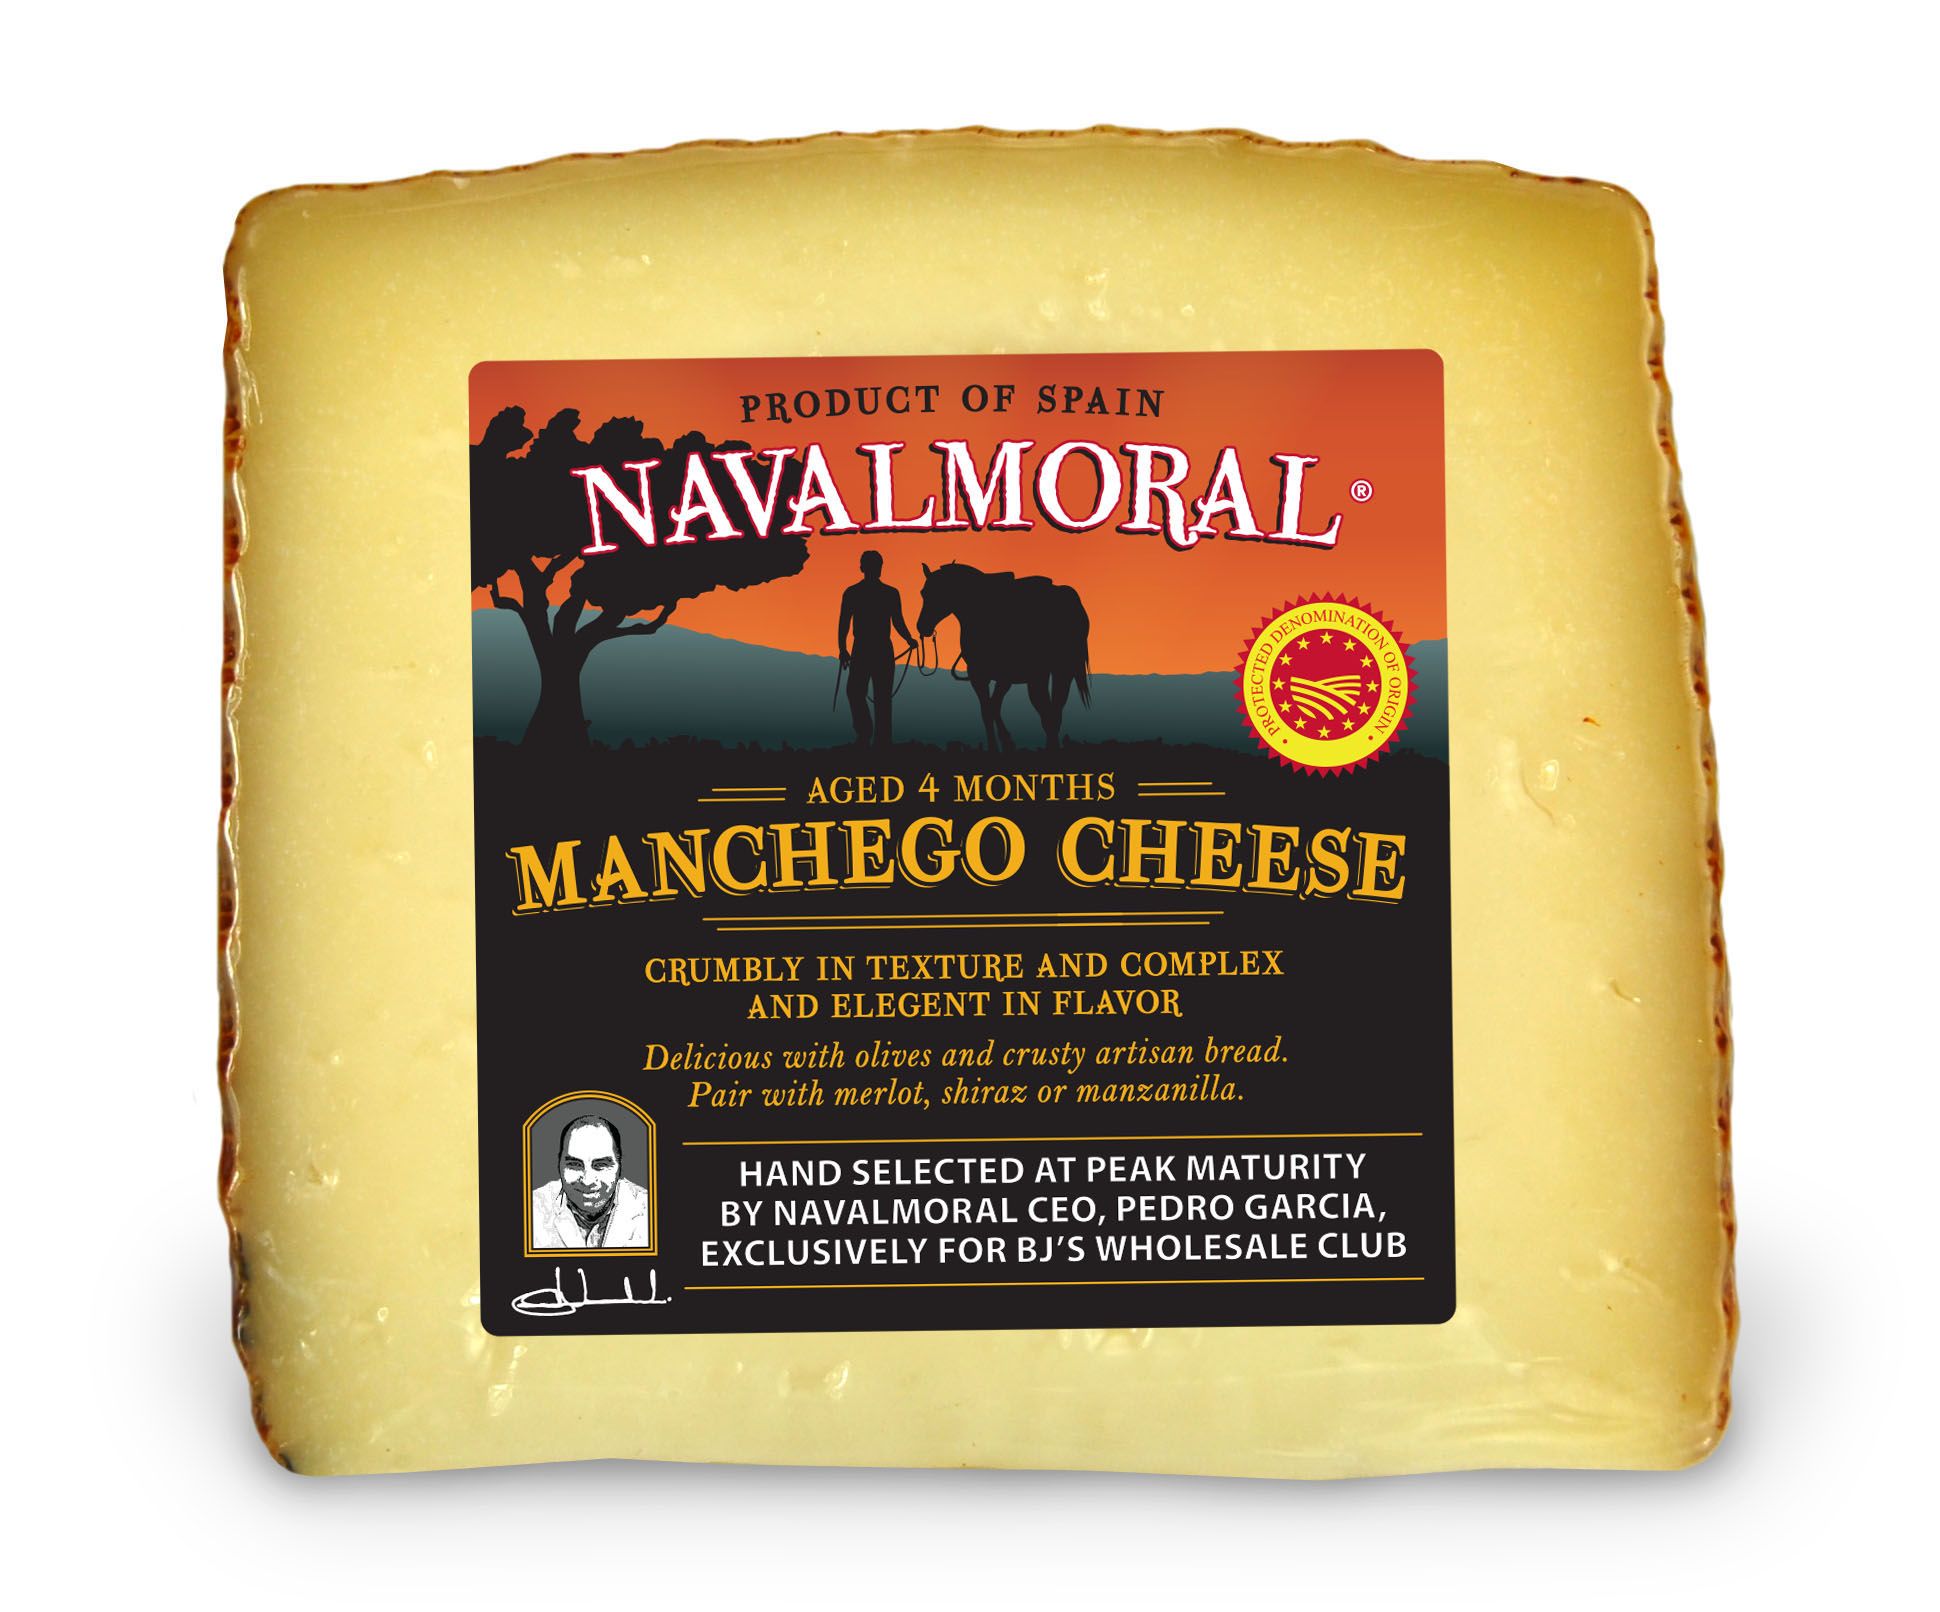 Navalmoral Manchego Cheese, 0.68-1.5 lb